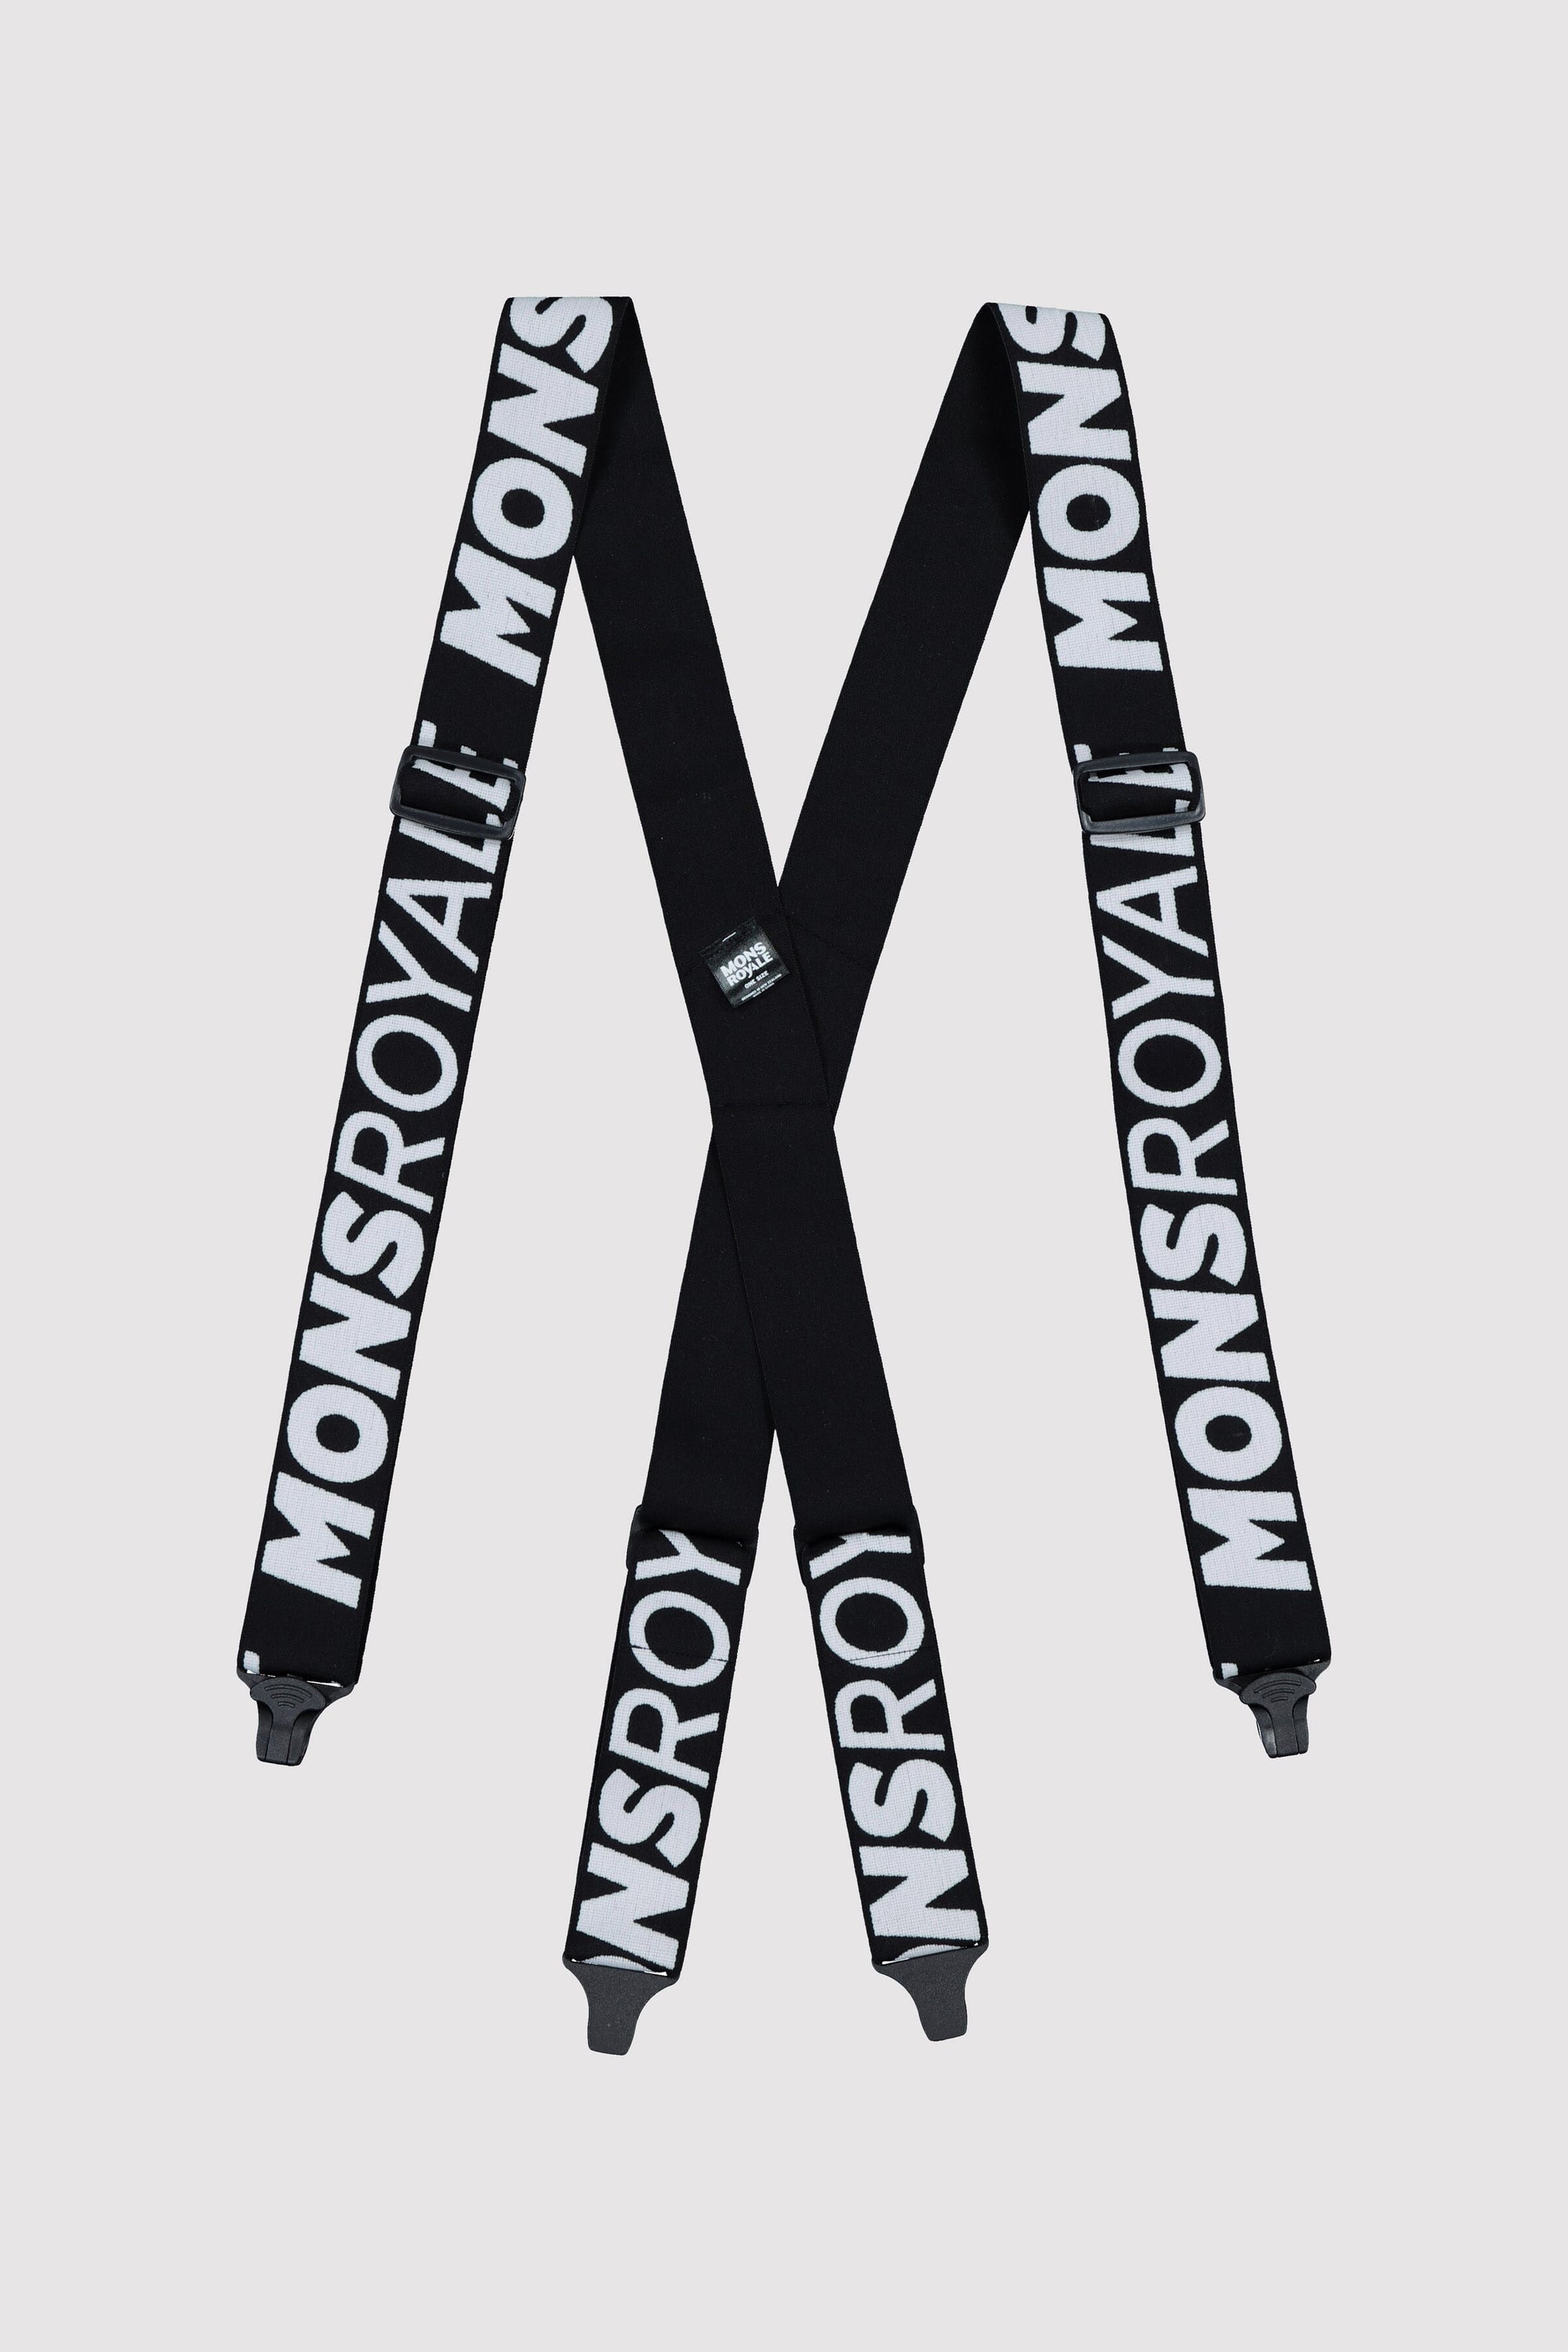 Afterbang Suspenders - Black White